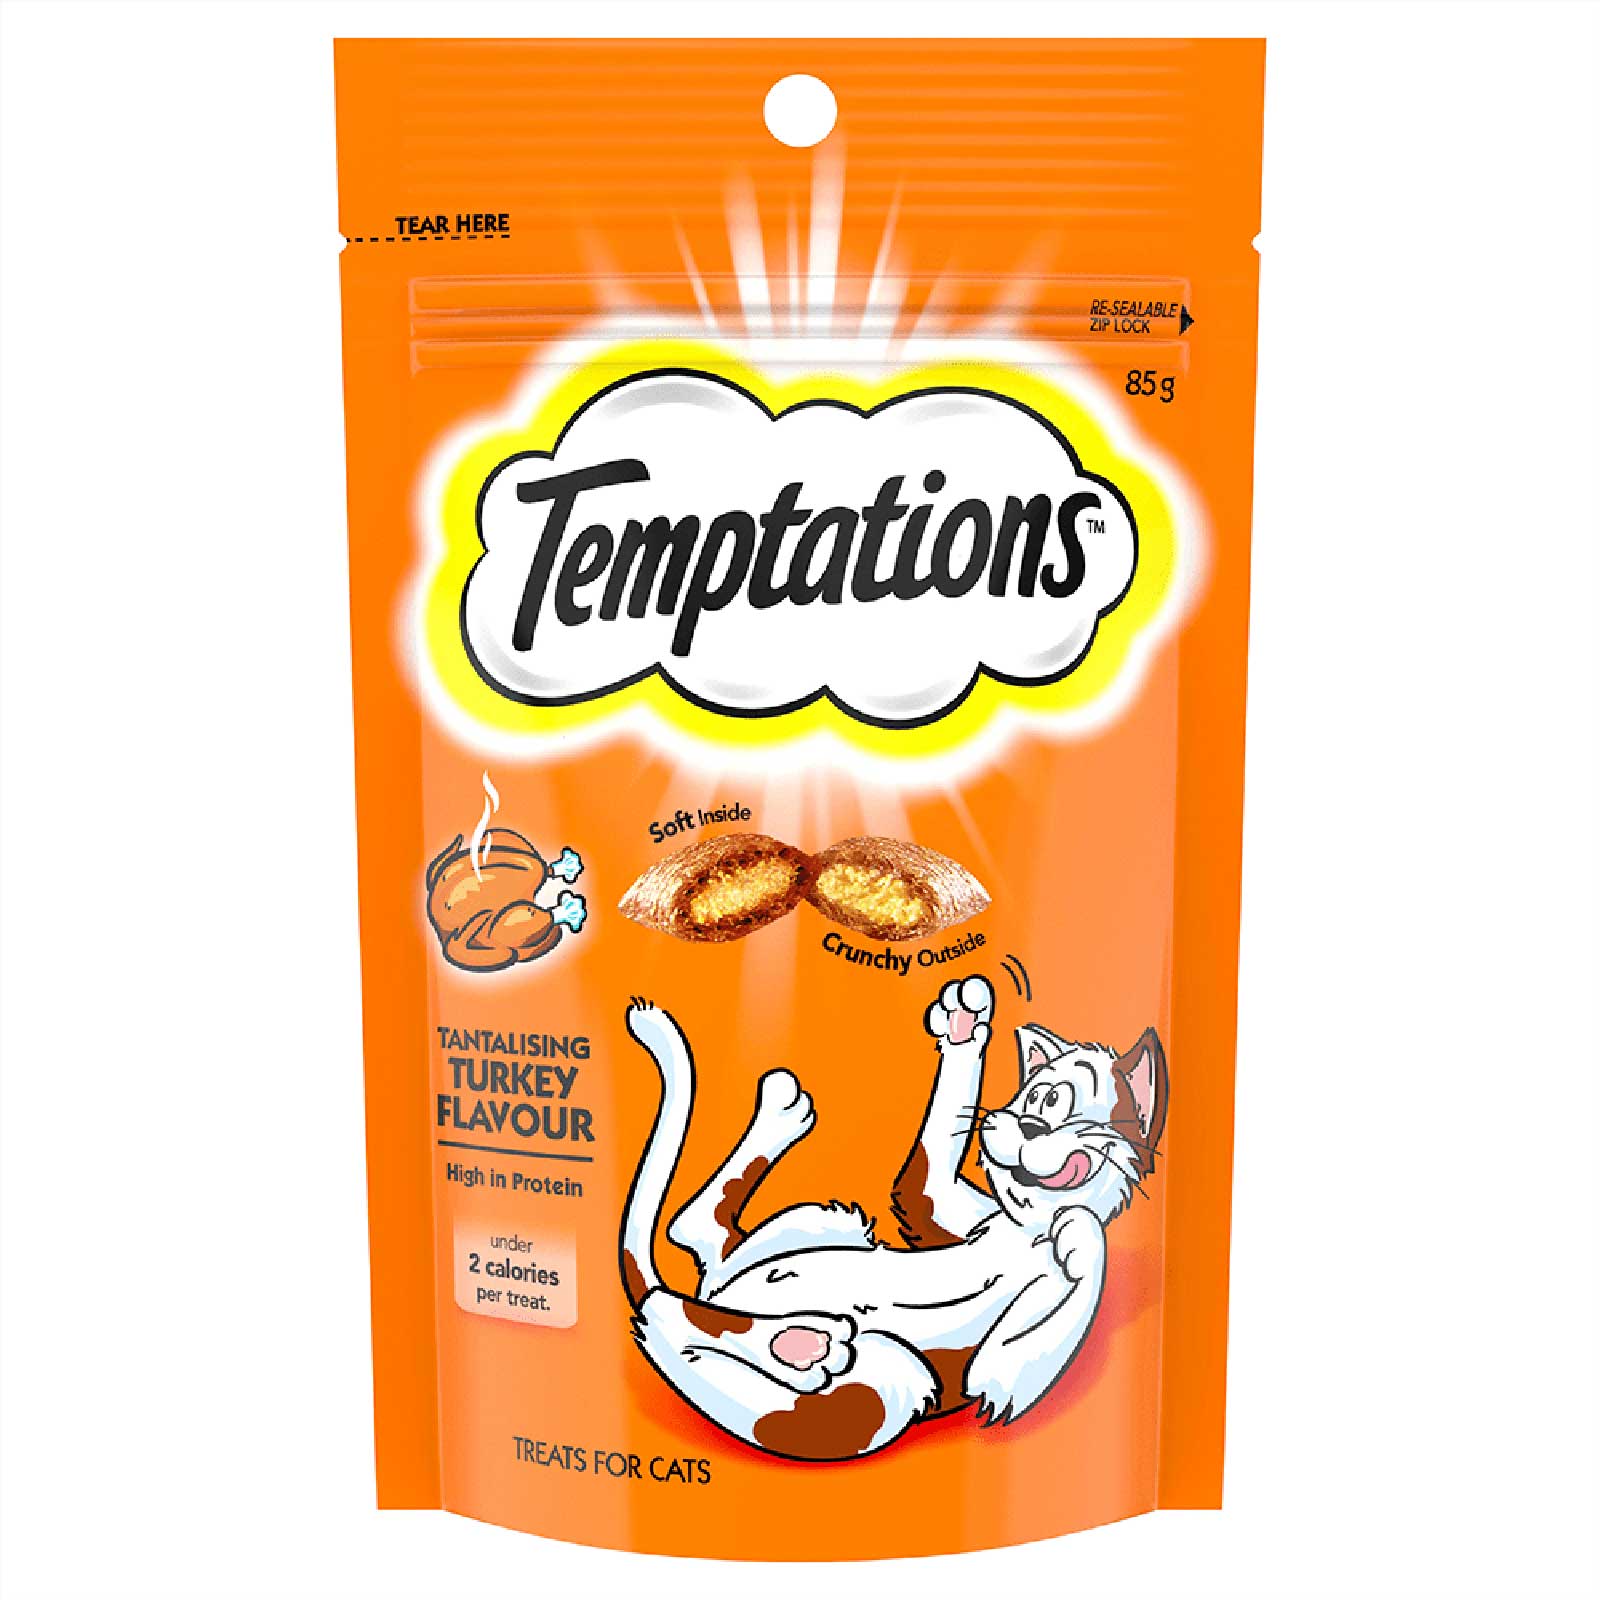 Temptations Tantalising Turkey Flavour Cat Treats